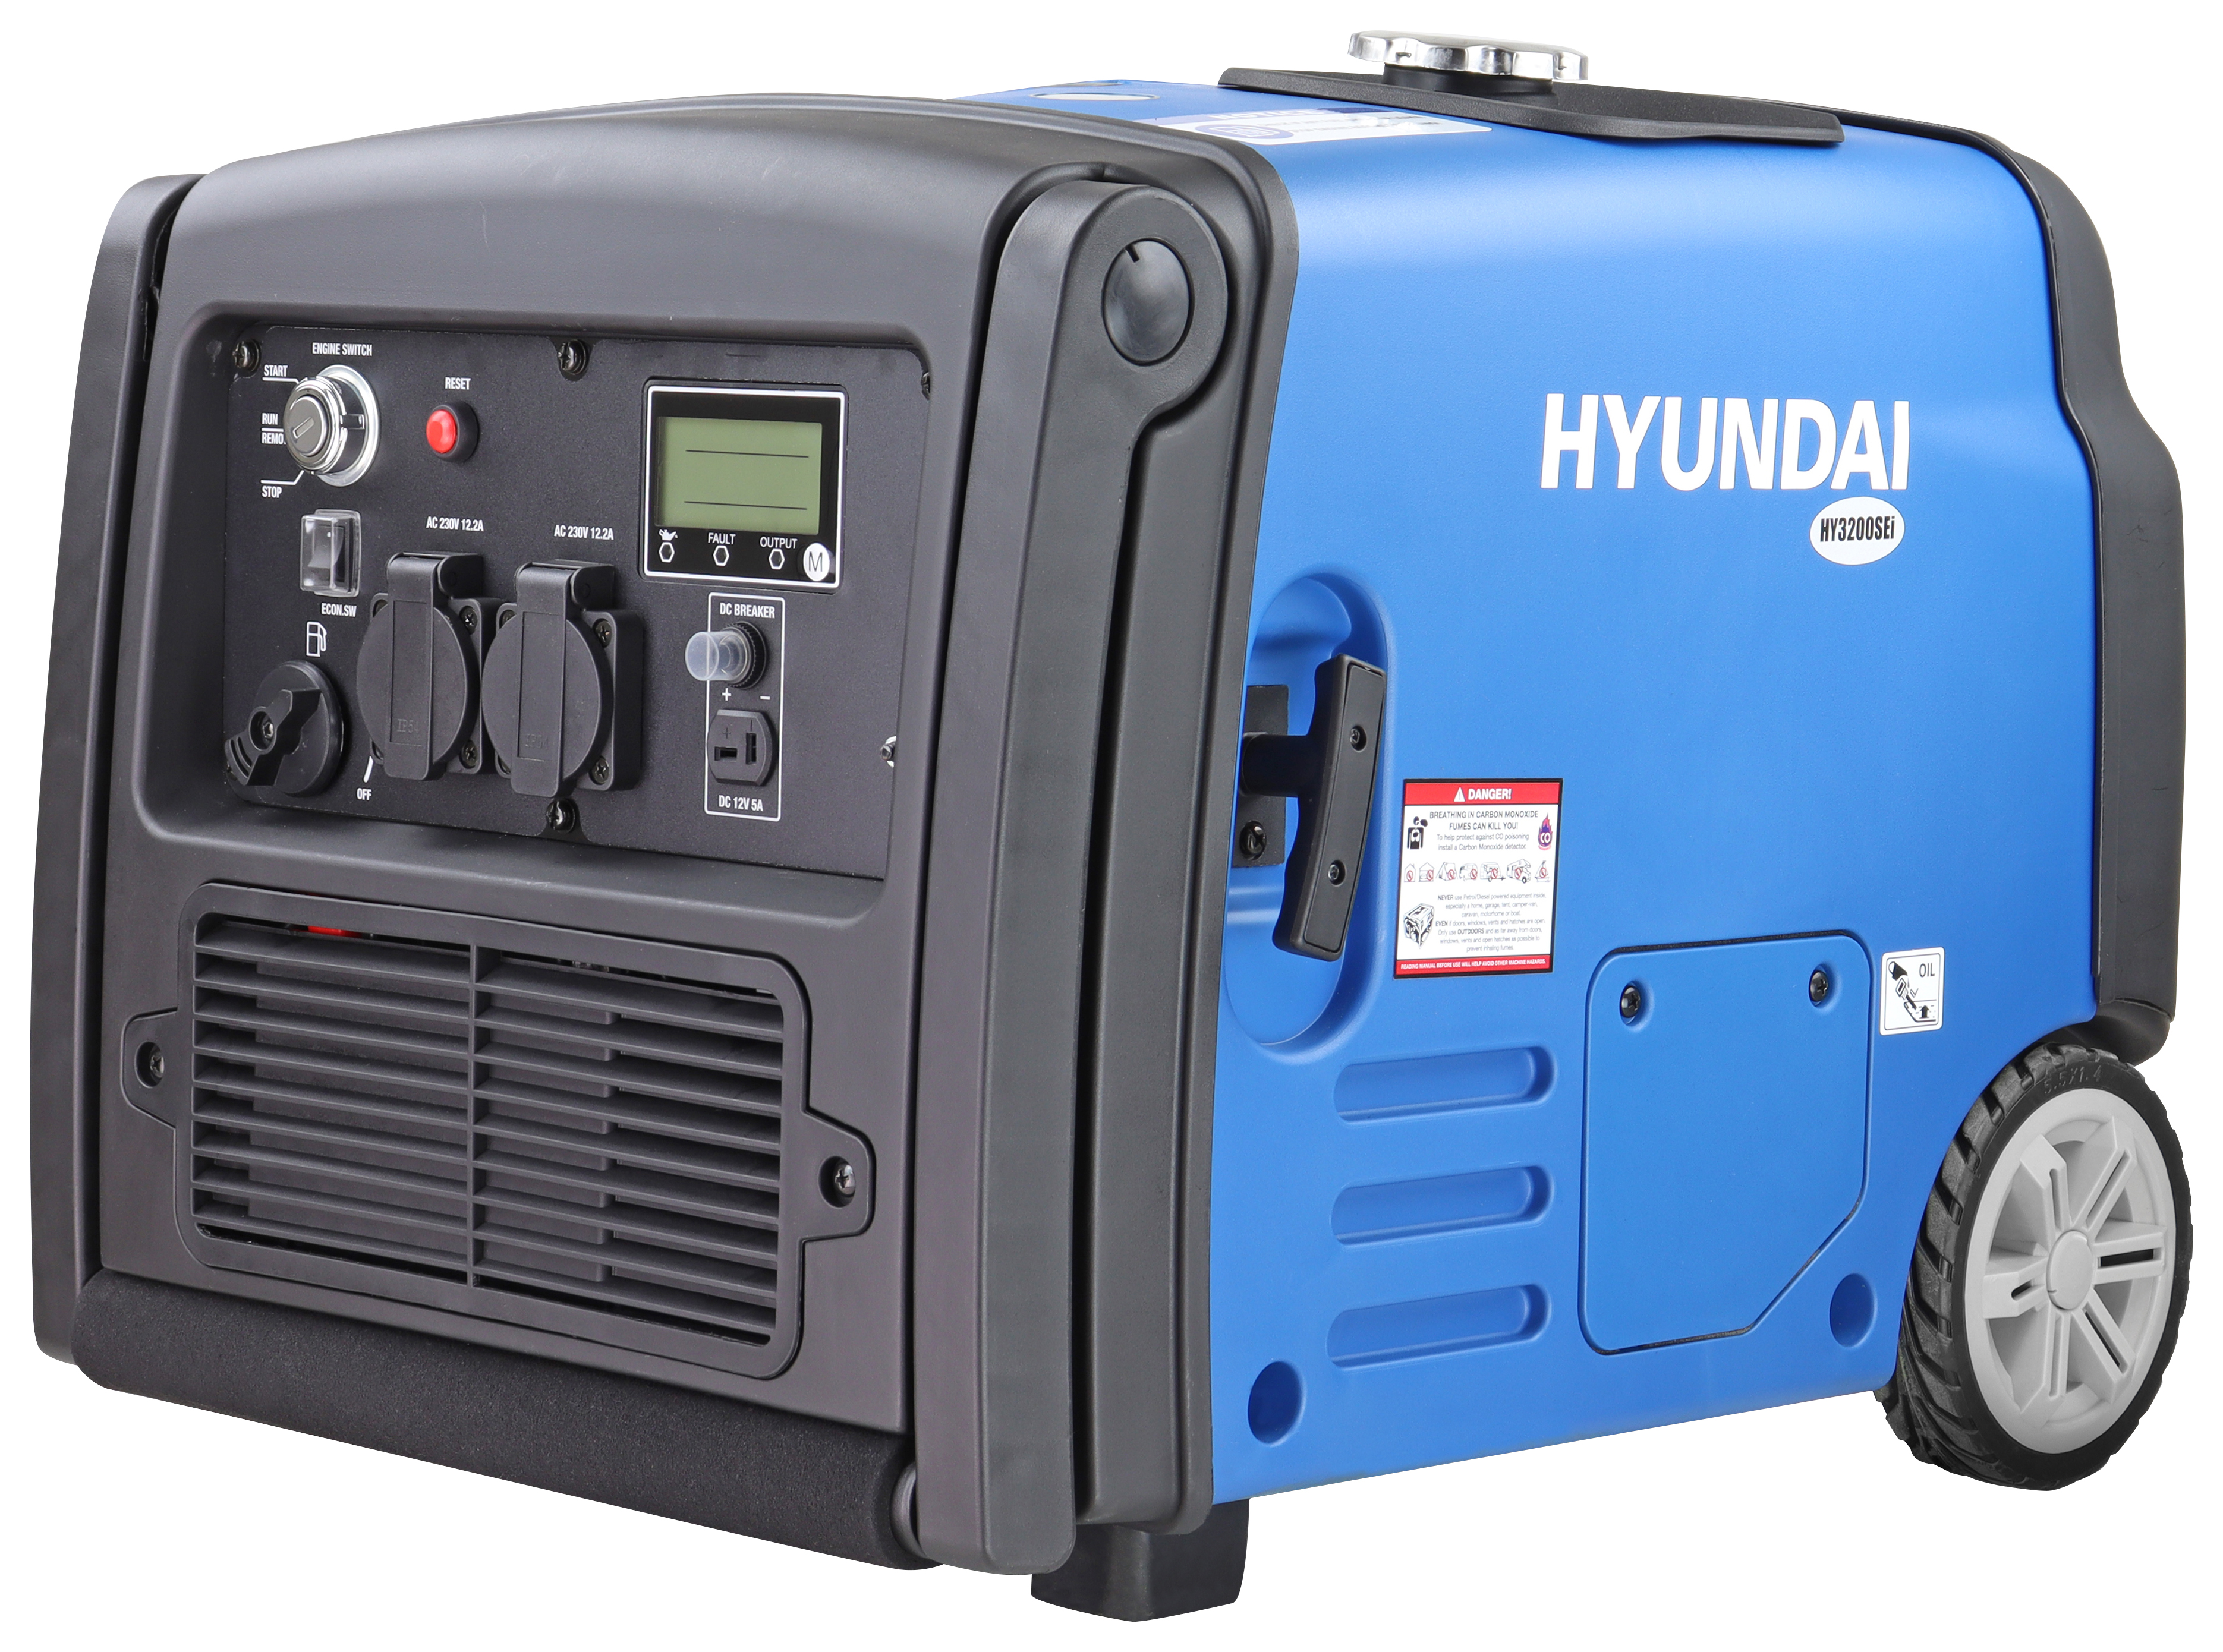 Hyundai HY3200SEI 210CC Inverter Petrol Generator with Built in Wheelkit - 3200W